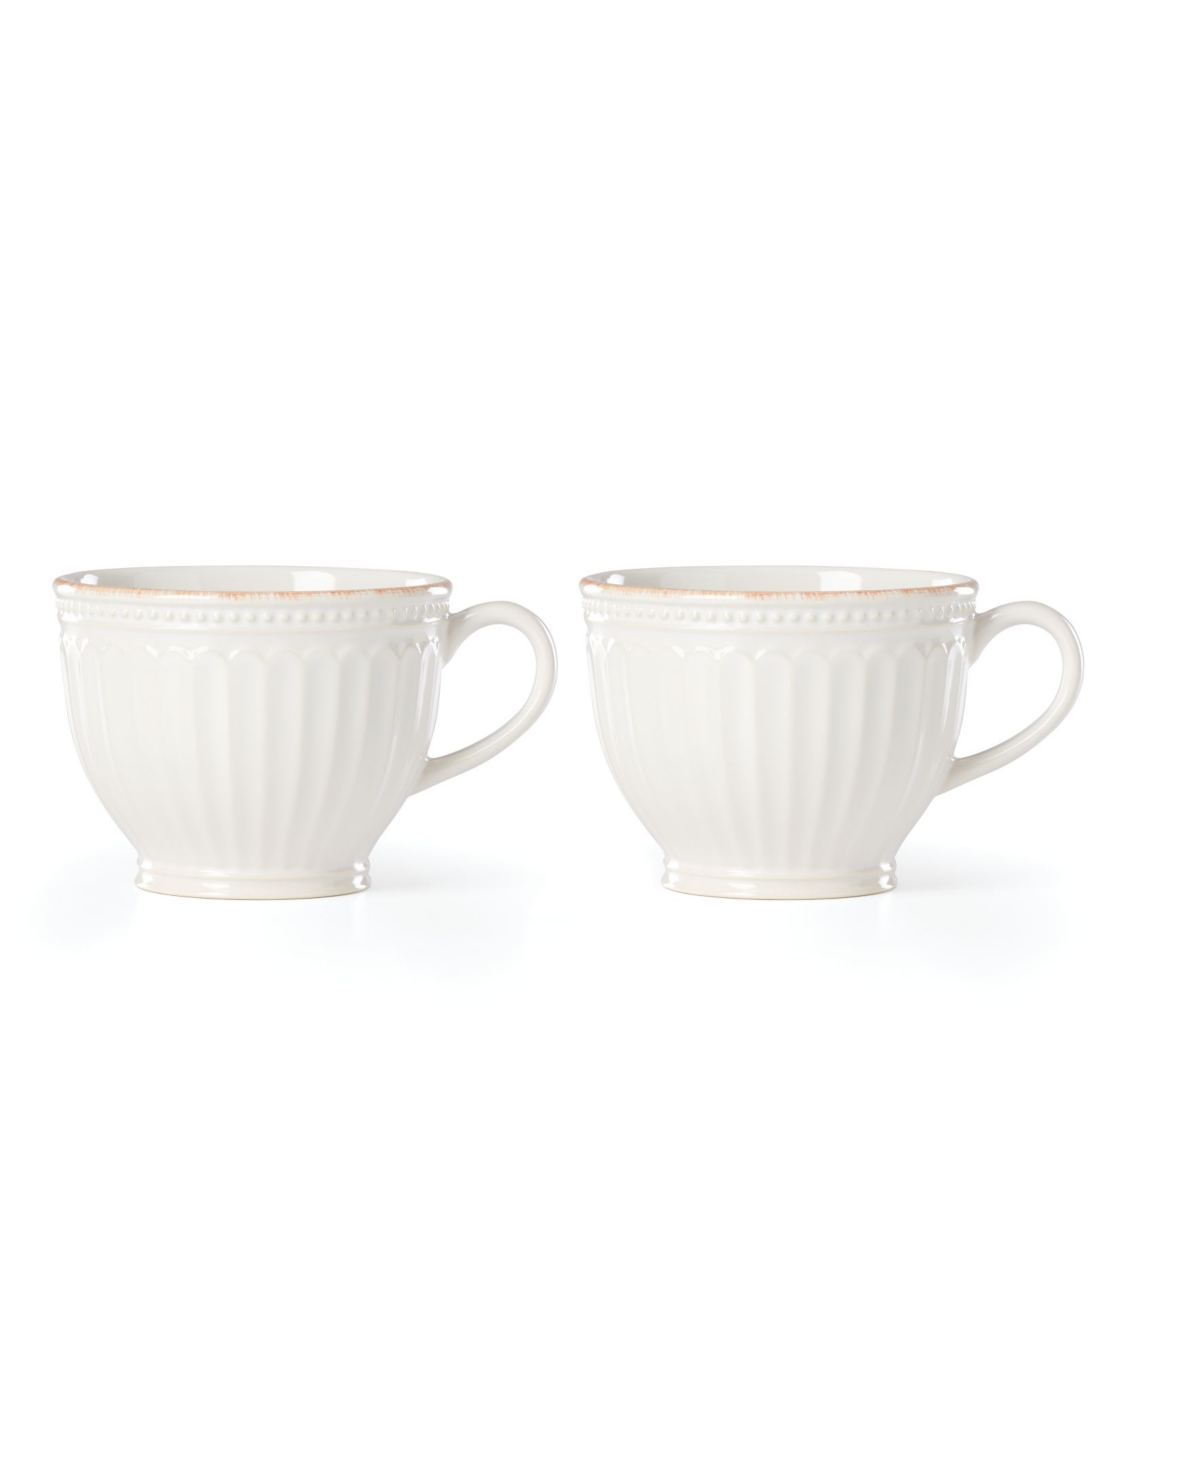 French Perle Groove Latte Mug Set, 2 Piece - White